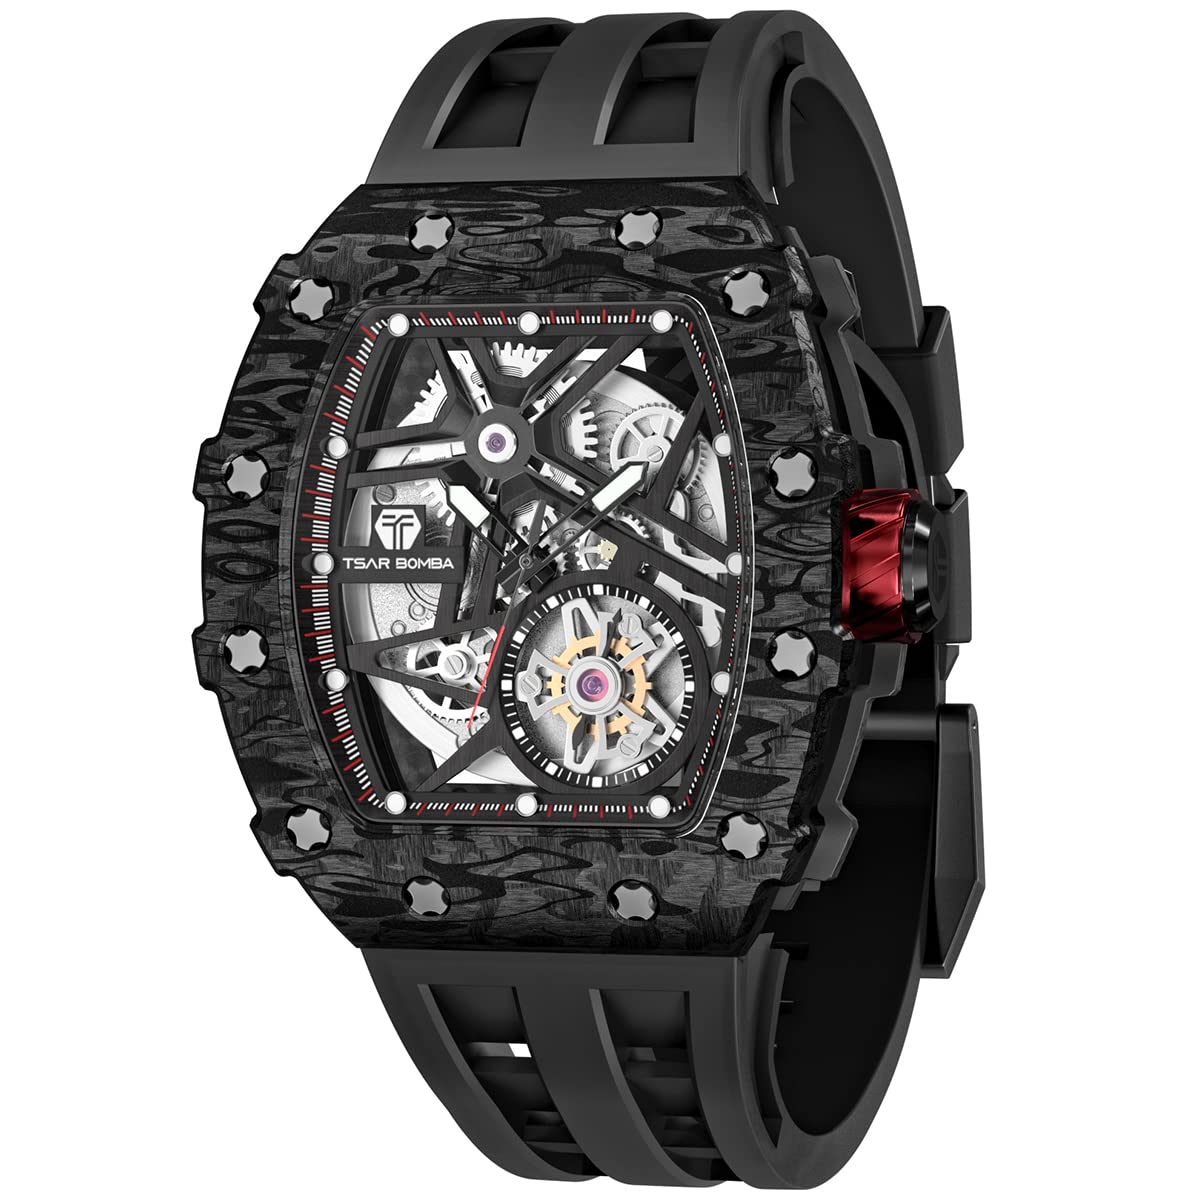 TSAR BOMBA Luxury Automatic Mechanical Watches For Men - Carbon Fiber Bezel - Japanese Movement Sapphire Glass - 50M Waterpro